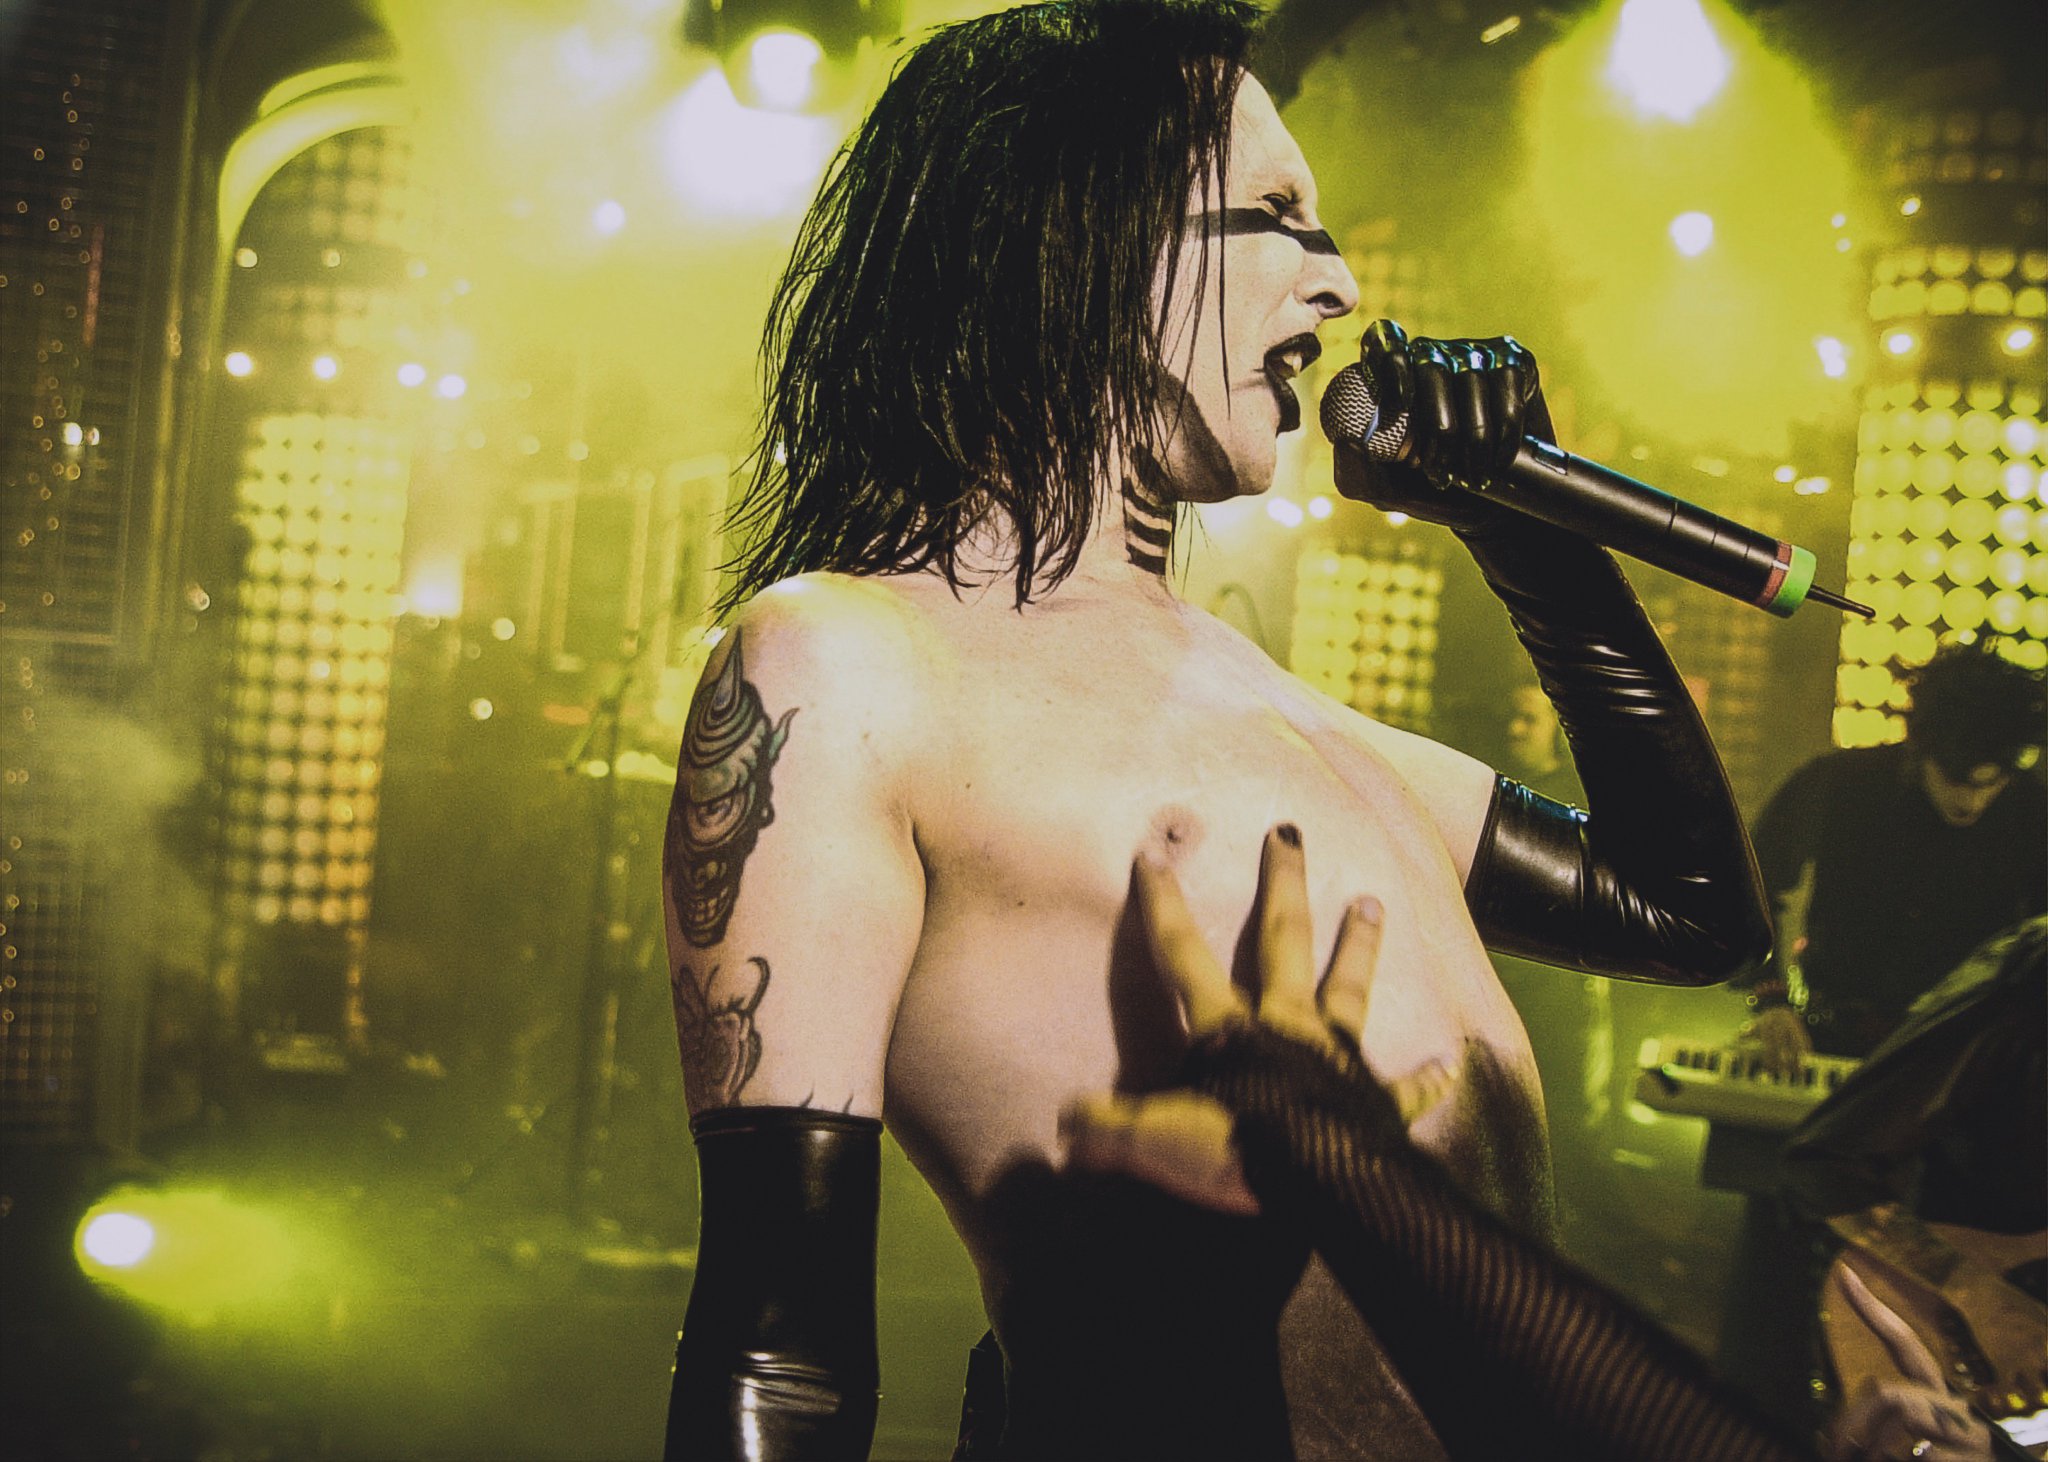 Marilyn Manson | Manson Source on Twitter.